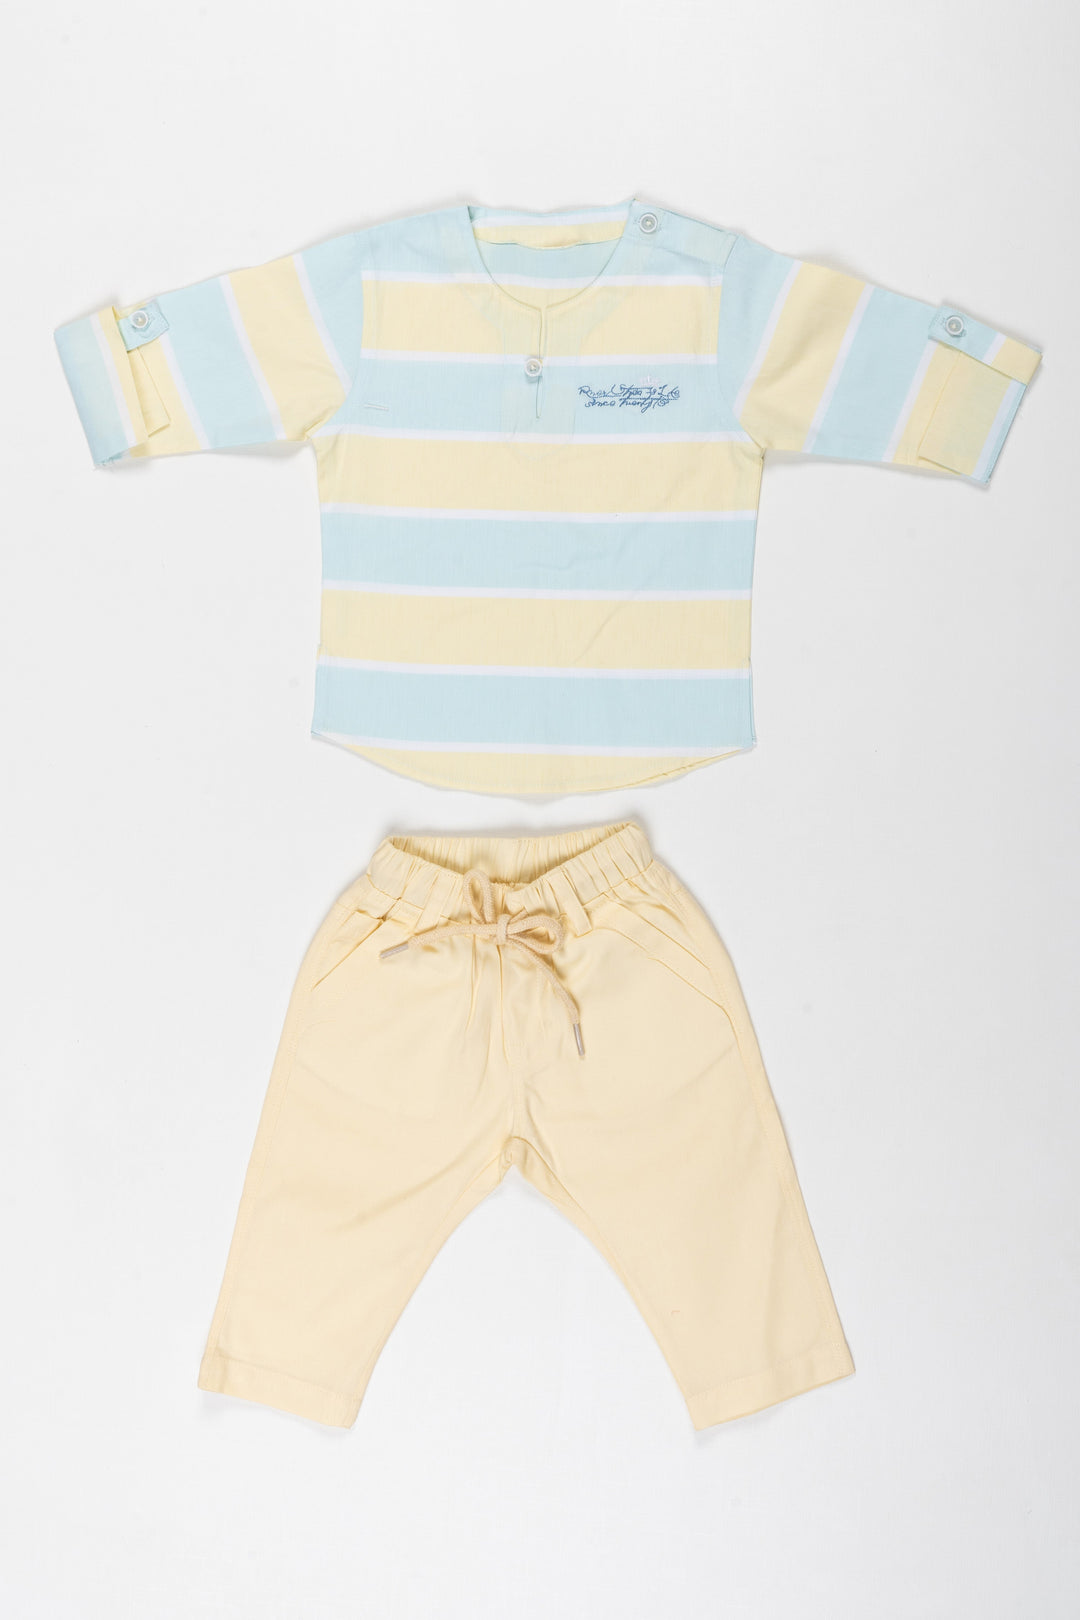 The Nesavu Boys Casual Set Sunshine Stripe Boys T-Shirt and Pant Set Nesavu 12 (3M) / Yellow / Cotton BCS023A-12 Boys Summer Stripe T Shirt and Pant Set | Casual Kids Outfits | The Nesavu